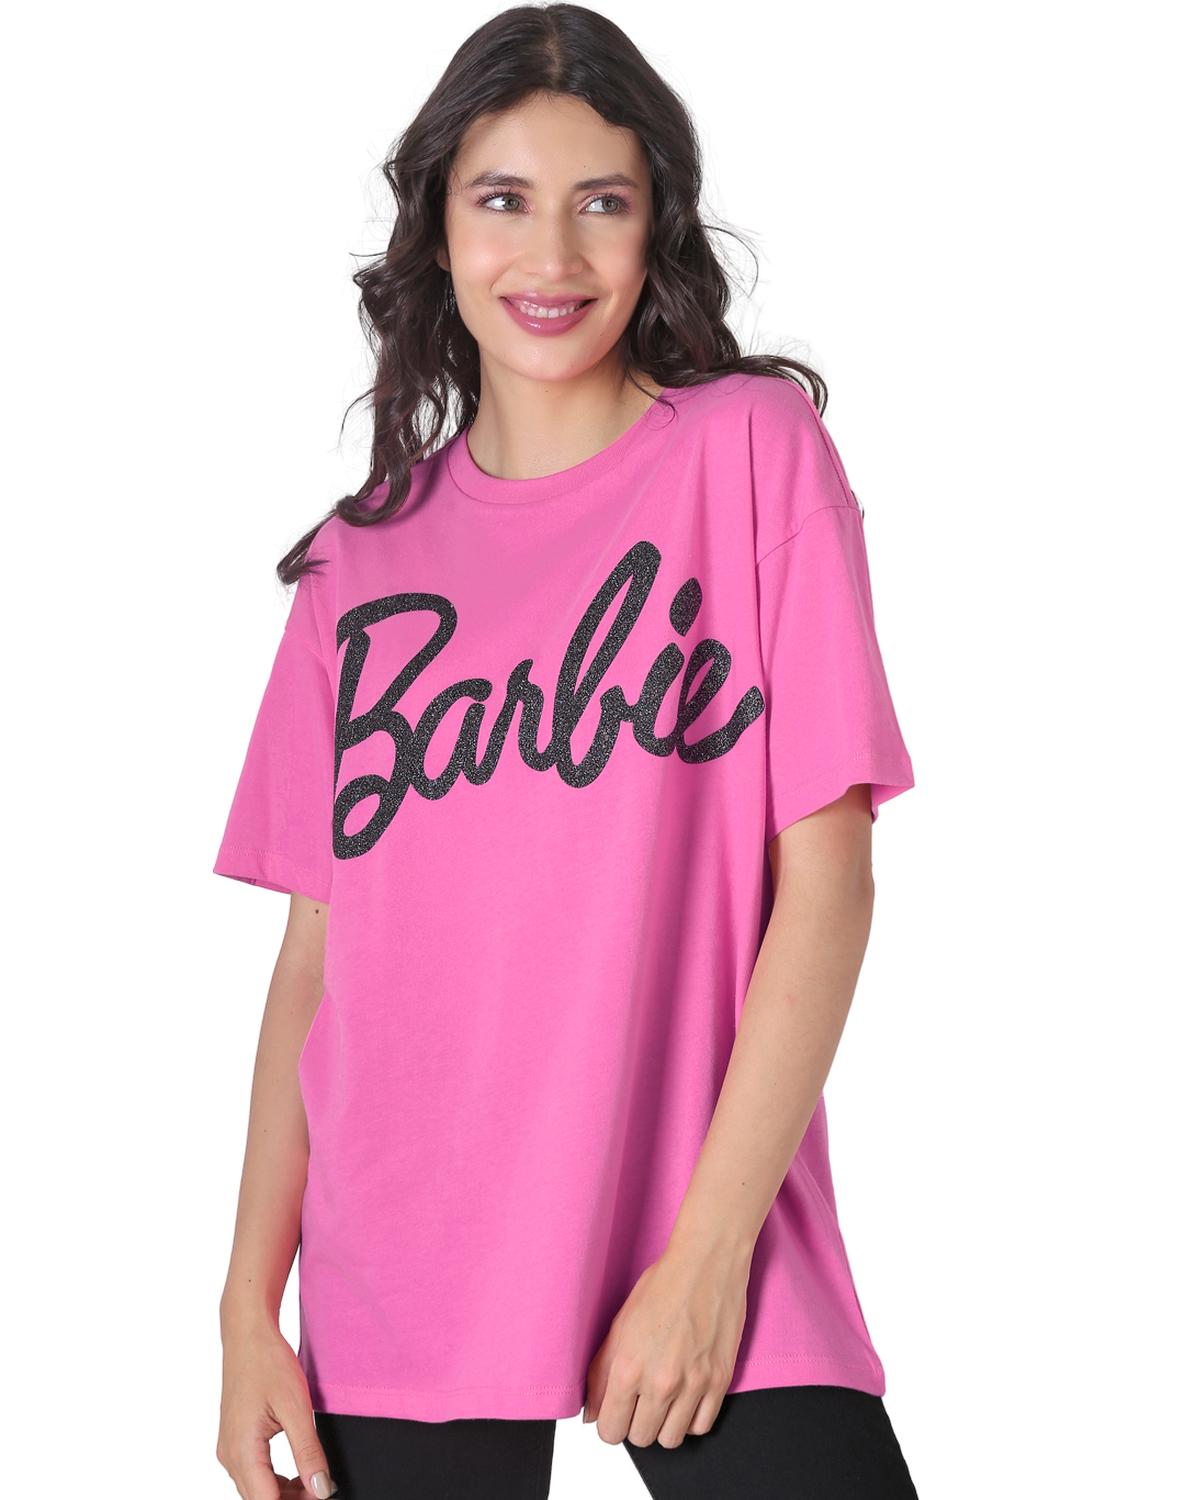 Playera Moda Camiseta Mujer Rosa Barbie 58204811